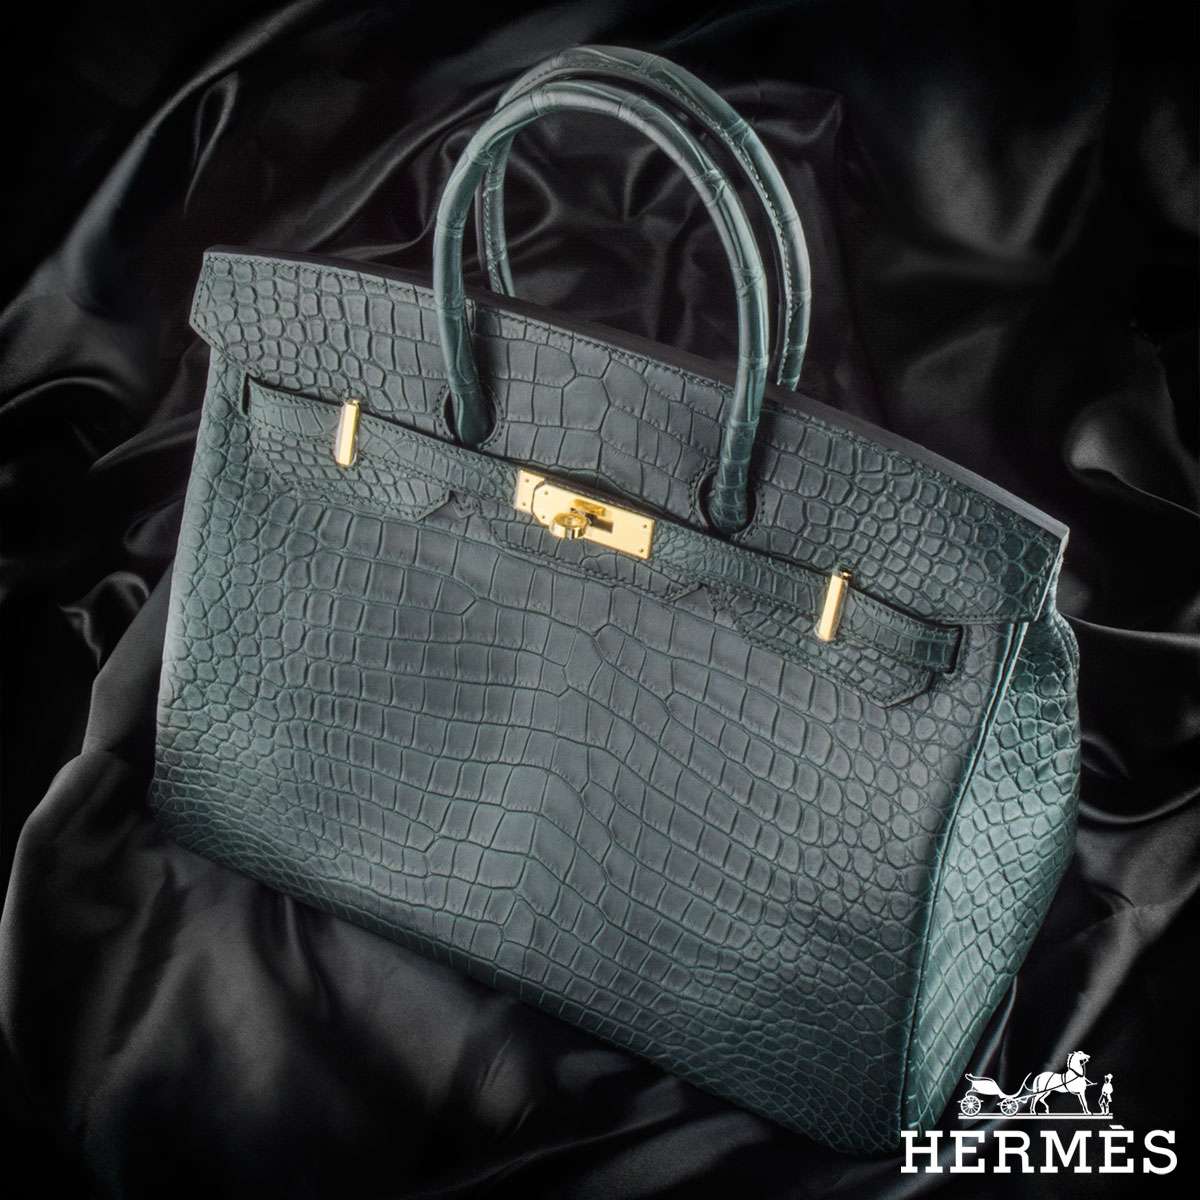 Hermès Birkin bag with diamonds and made from albino crocodile